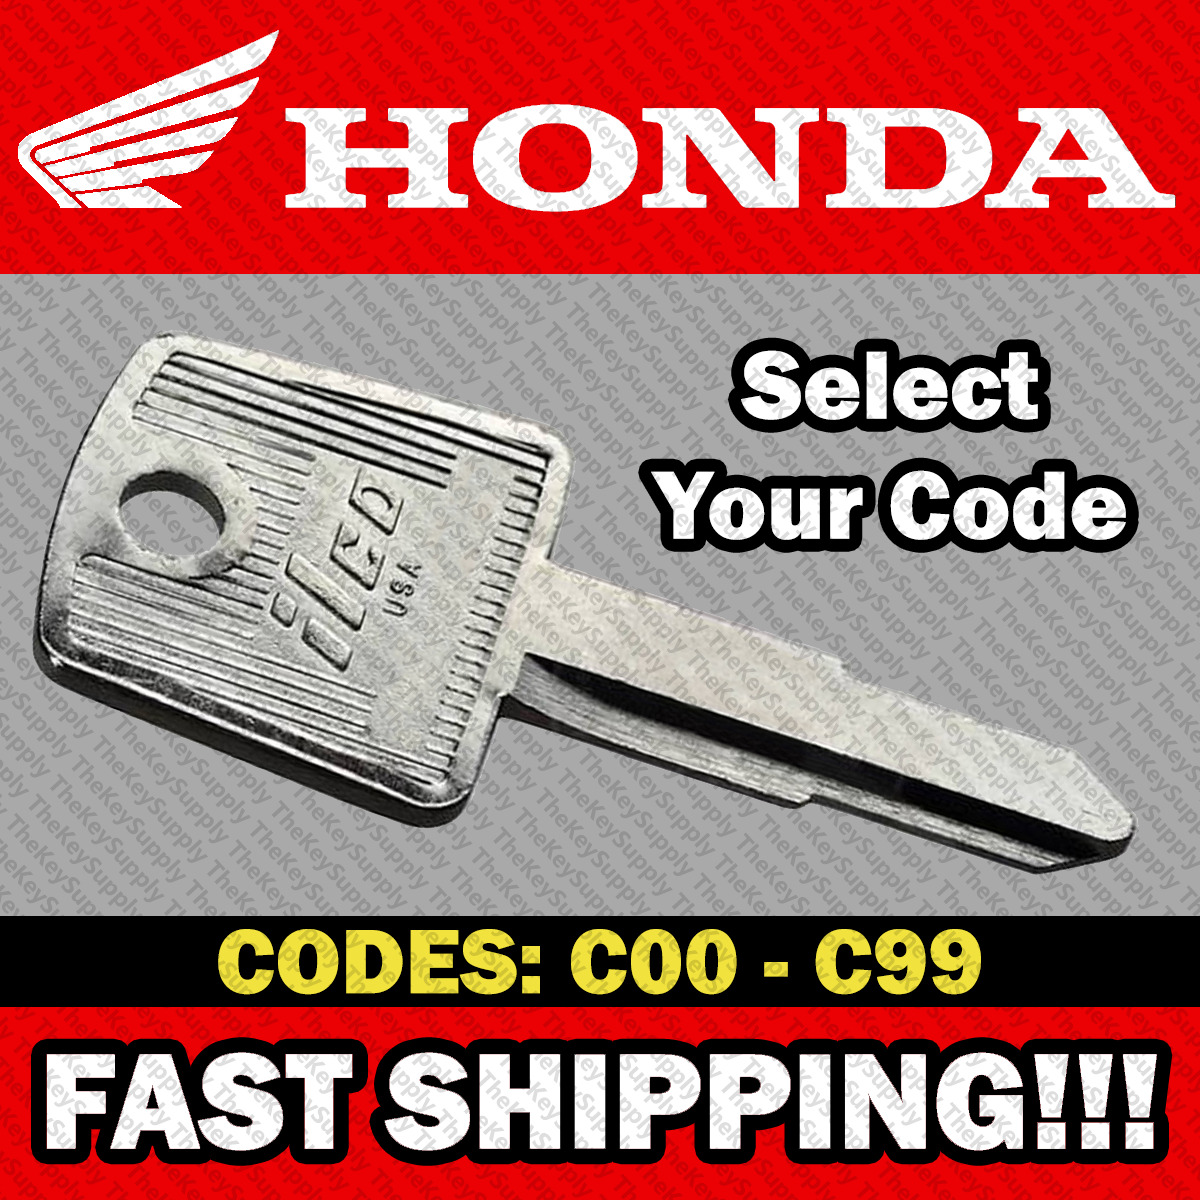 Honda Motorcycle Replacement Key Cut to Code C00 - C99